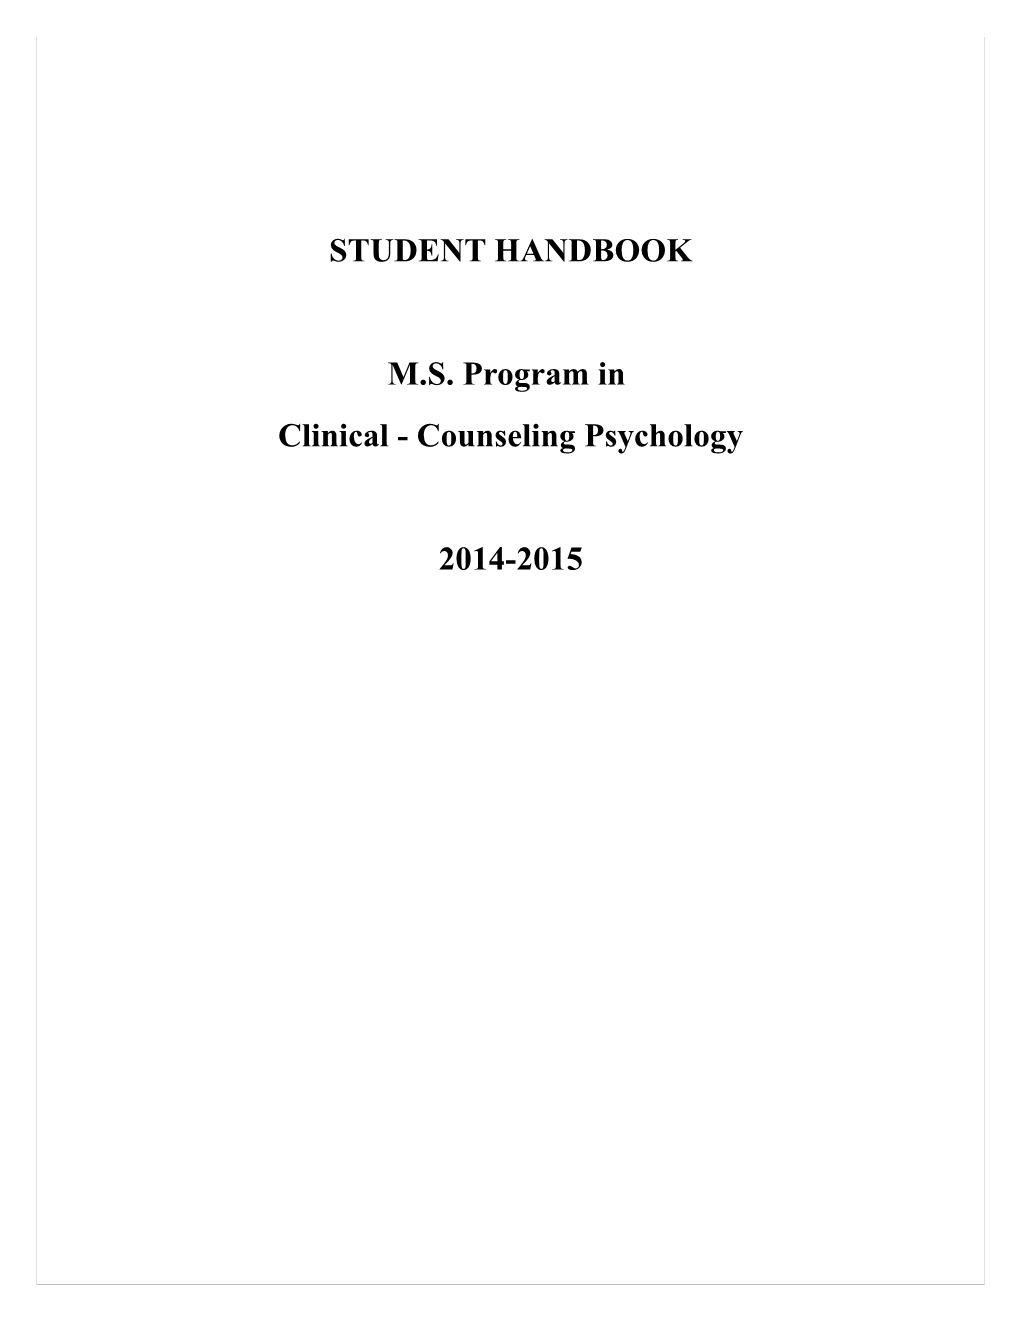 Student Handbook s11